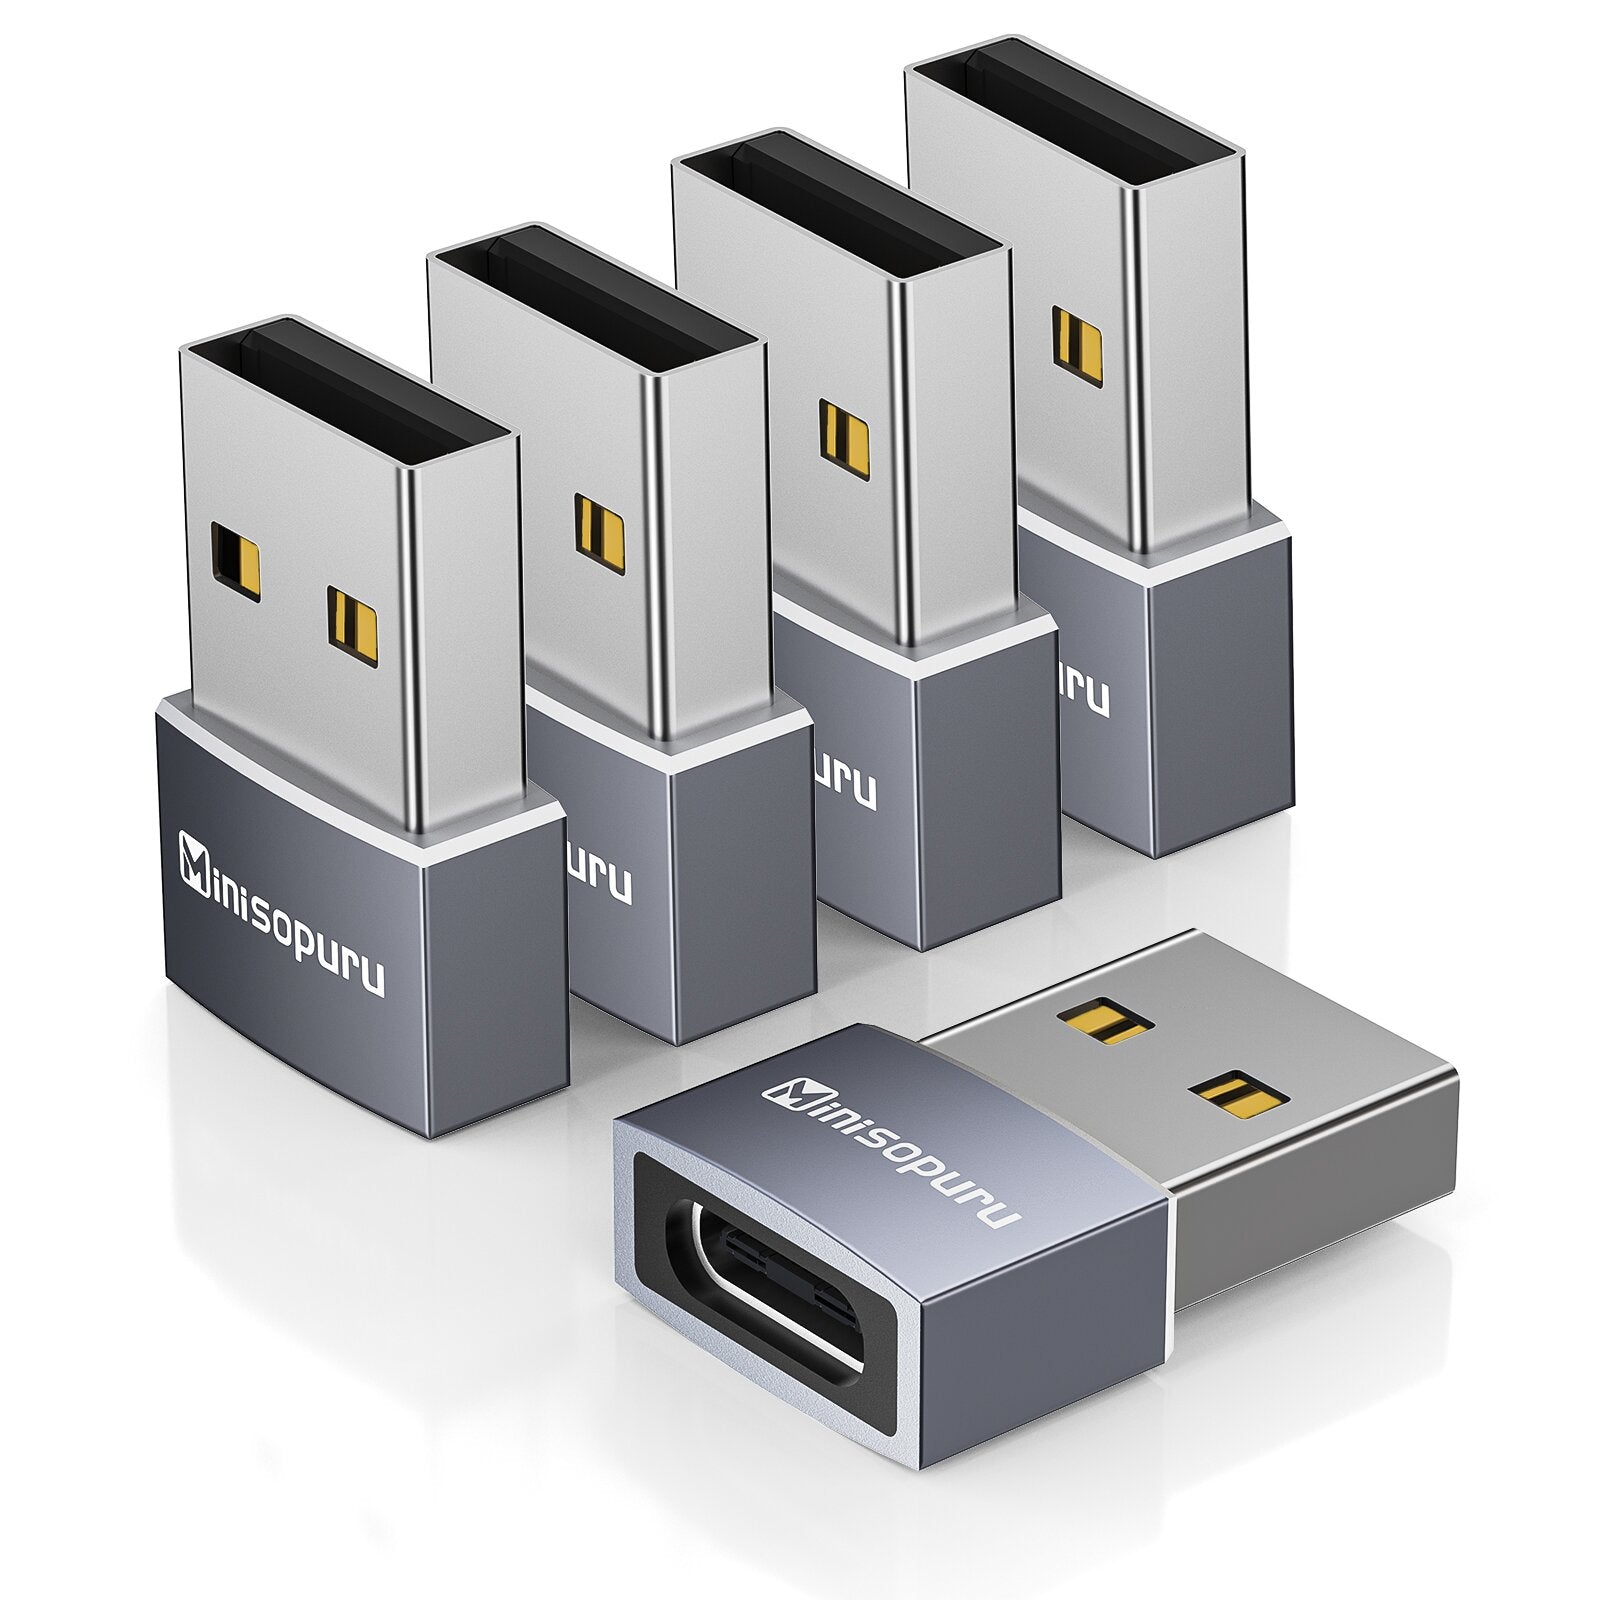 Minisopuru USB to USB C Adapter 2pcs Type C Female to Male Charger Converter|MAC801